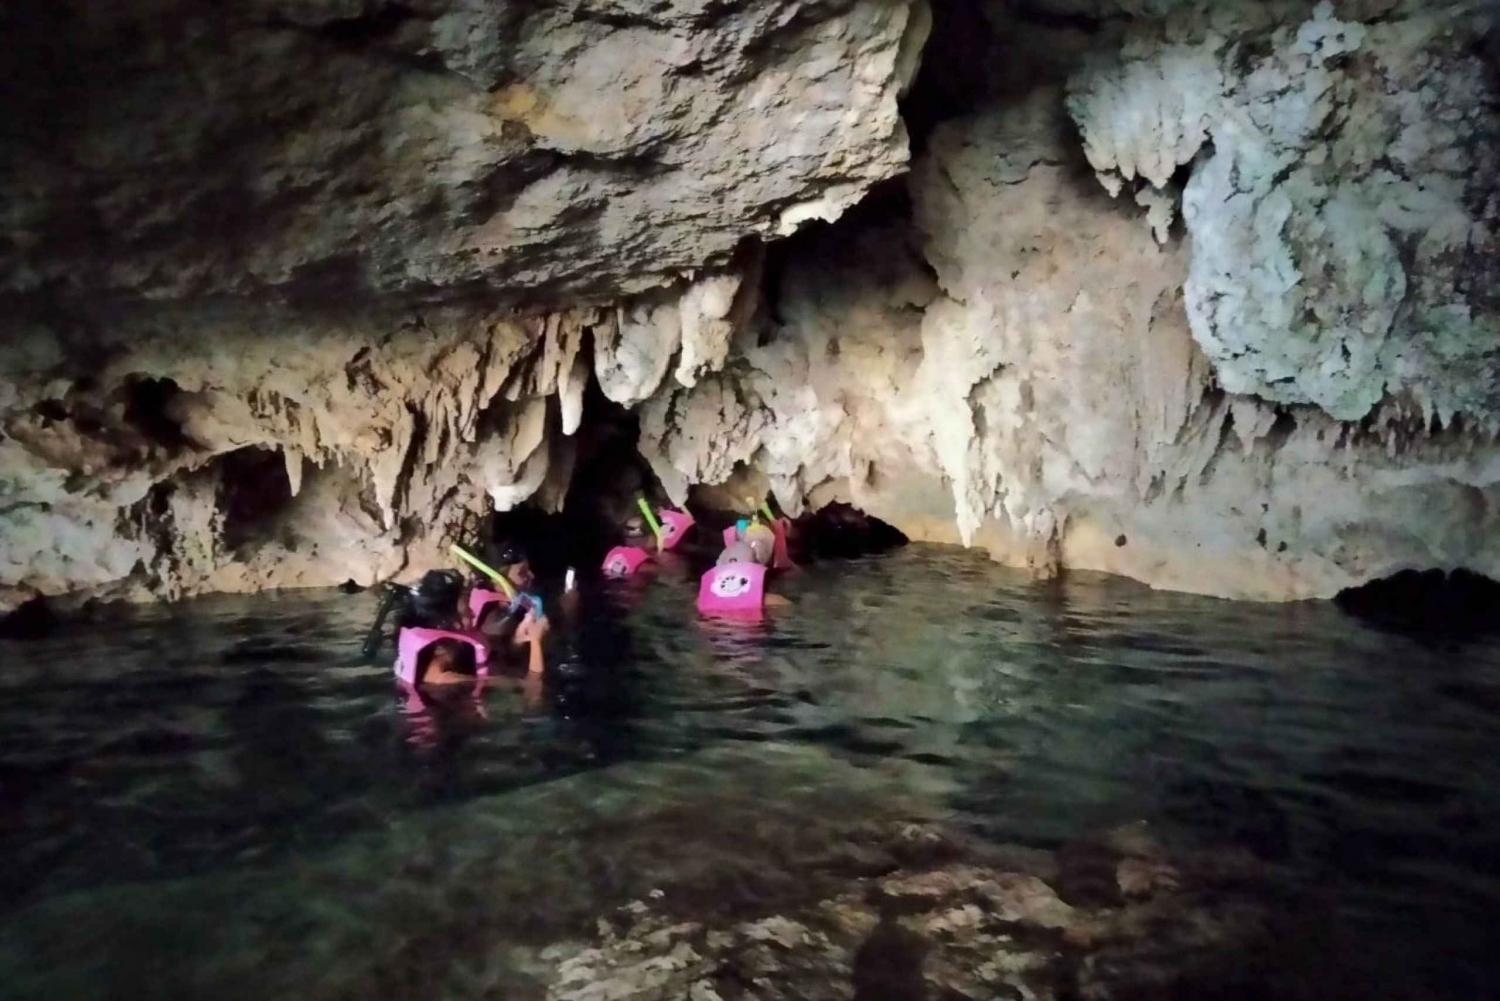 Riviera Maya: Turtles Snorkeling and Cenote Cave